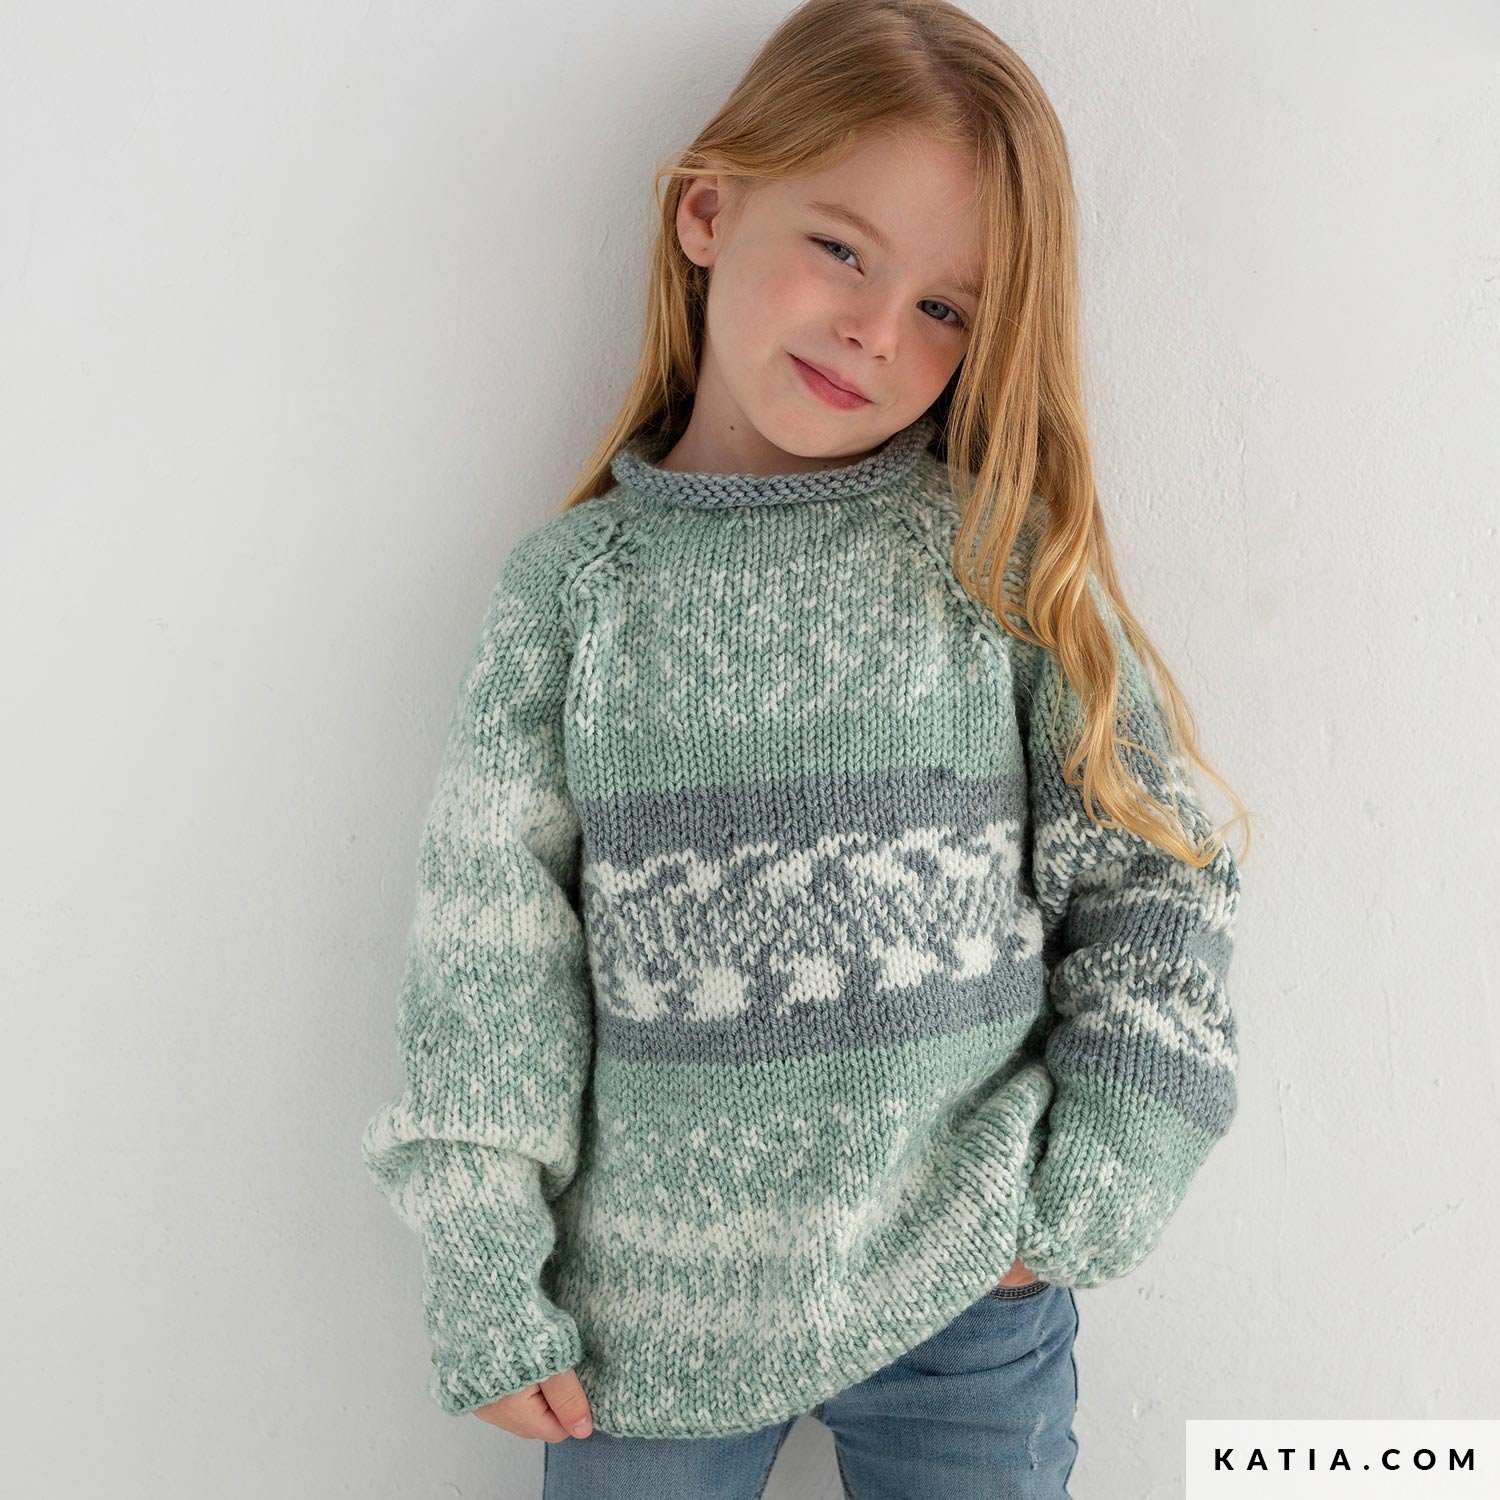 Leugen relais Geneigd zijn Sweater - Kids - Autumn / Winter - models & patterns | Katia.com